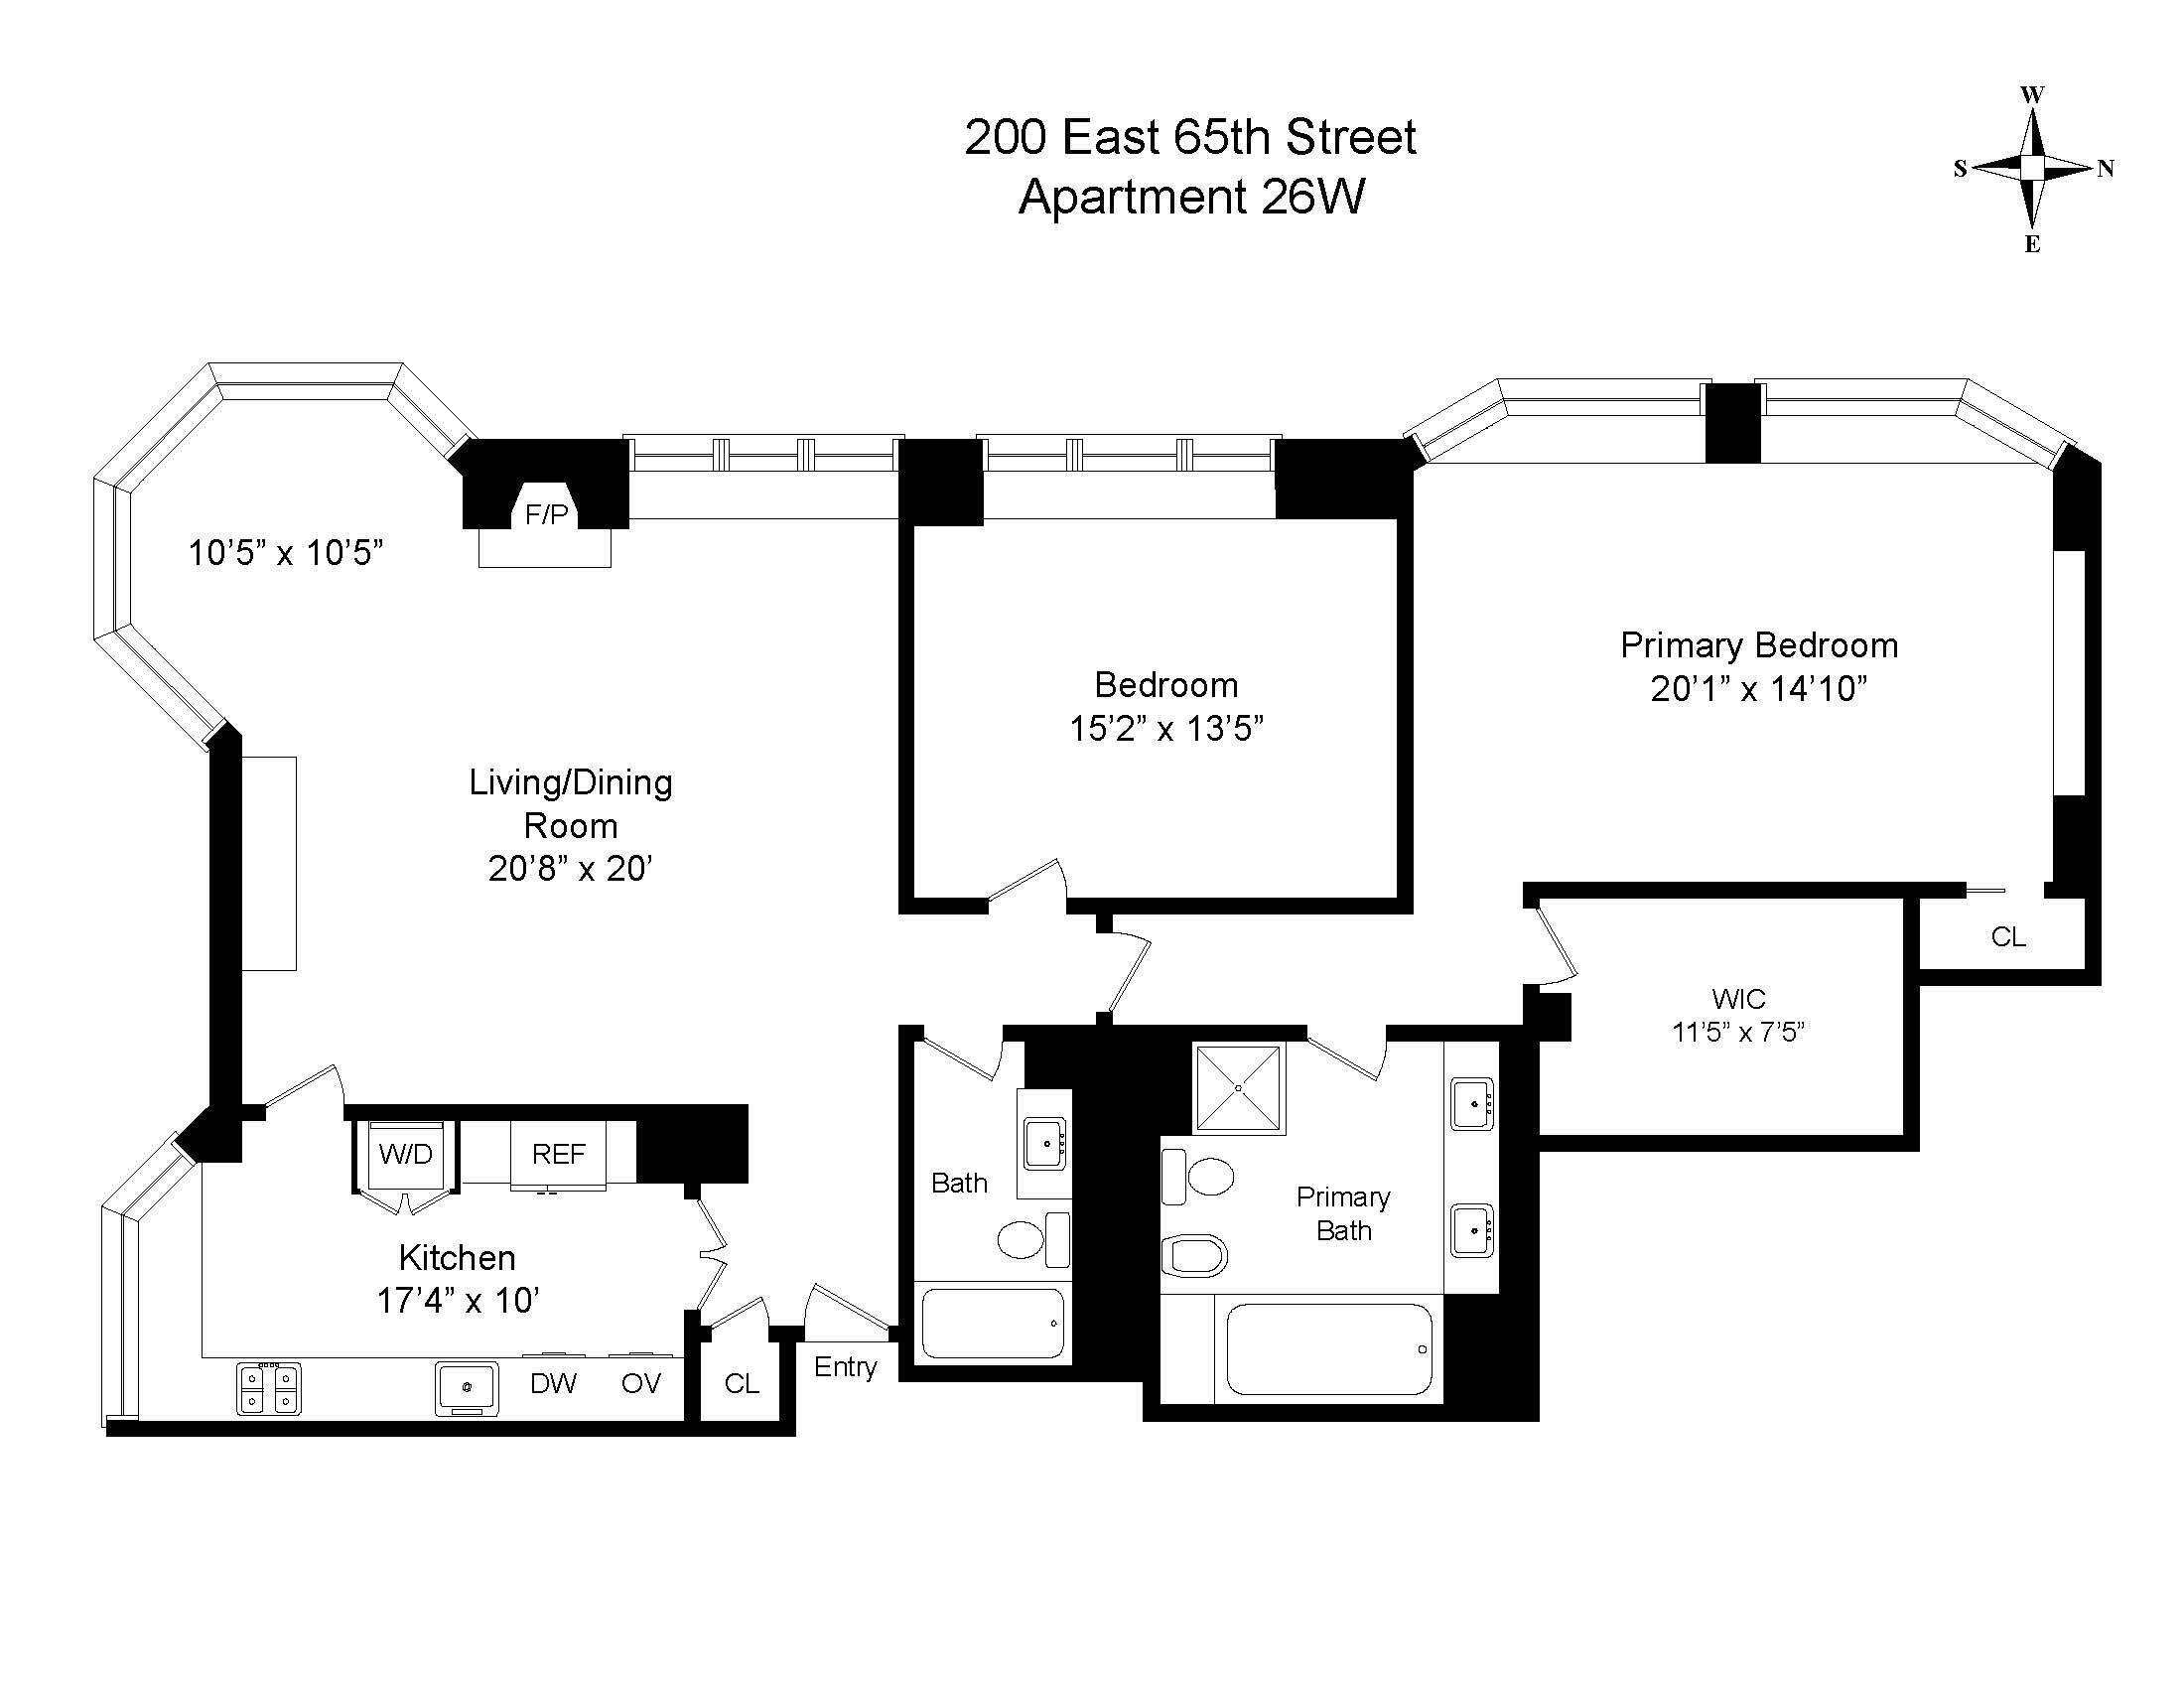 Floorplan for 200 East 65th Street, 26W